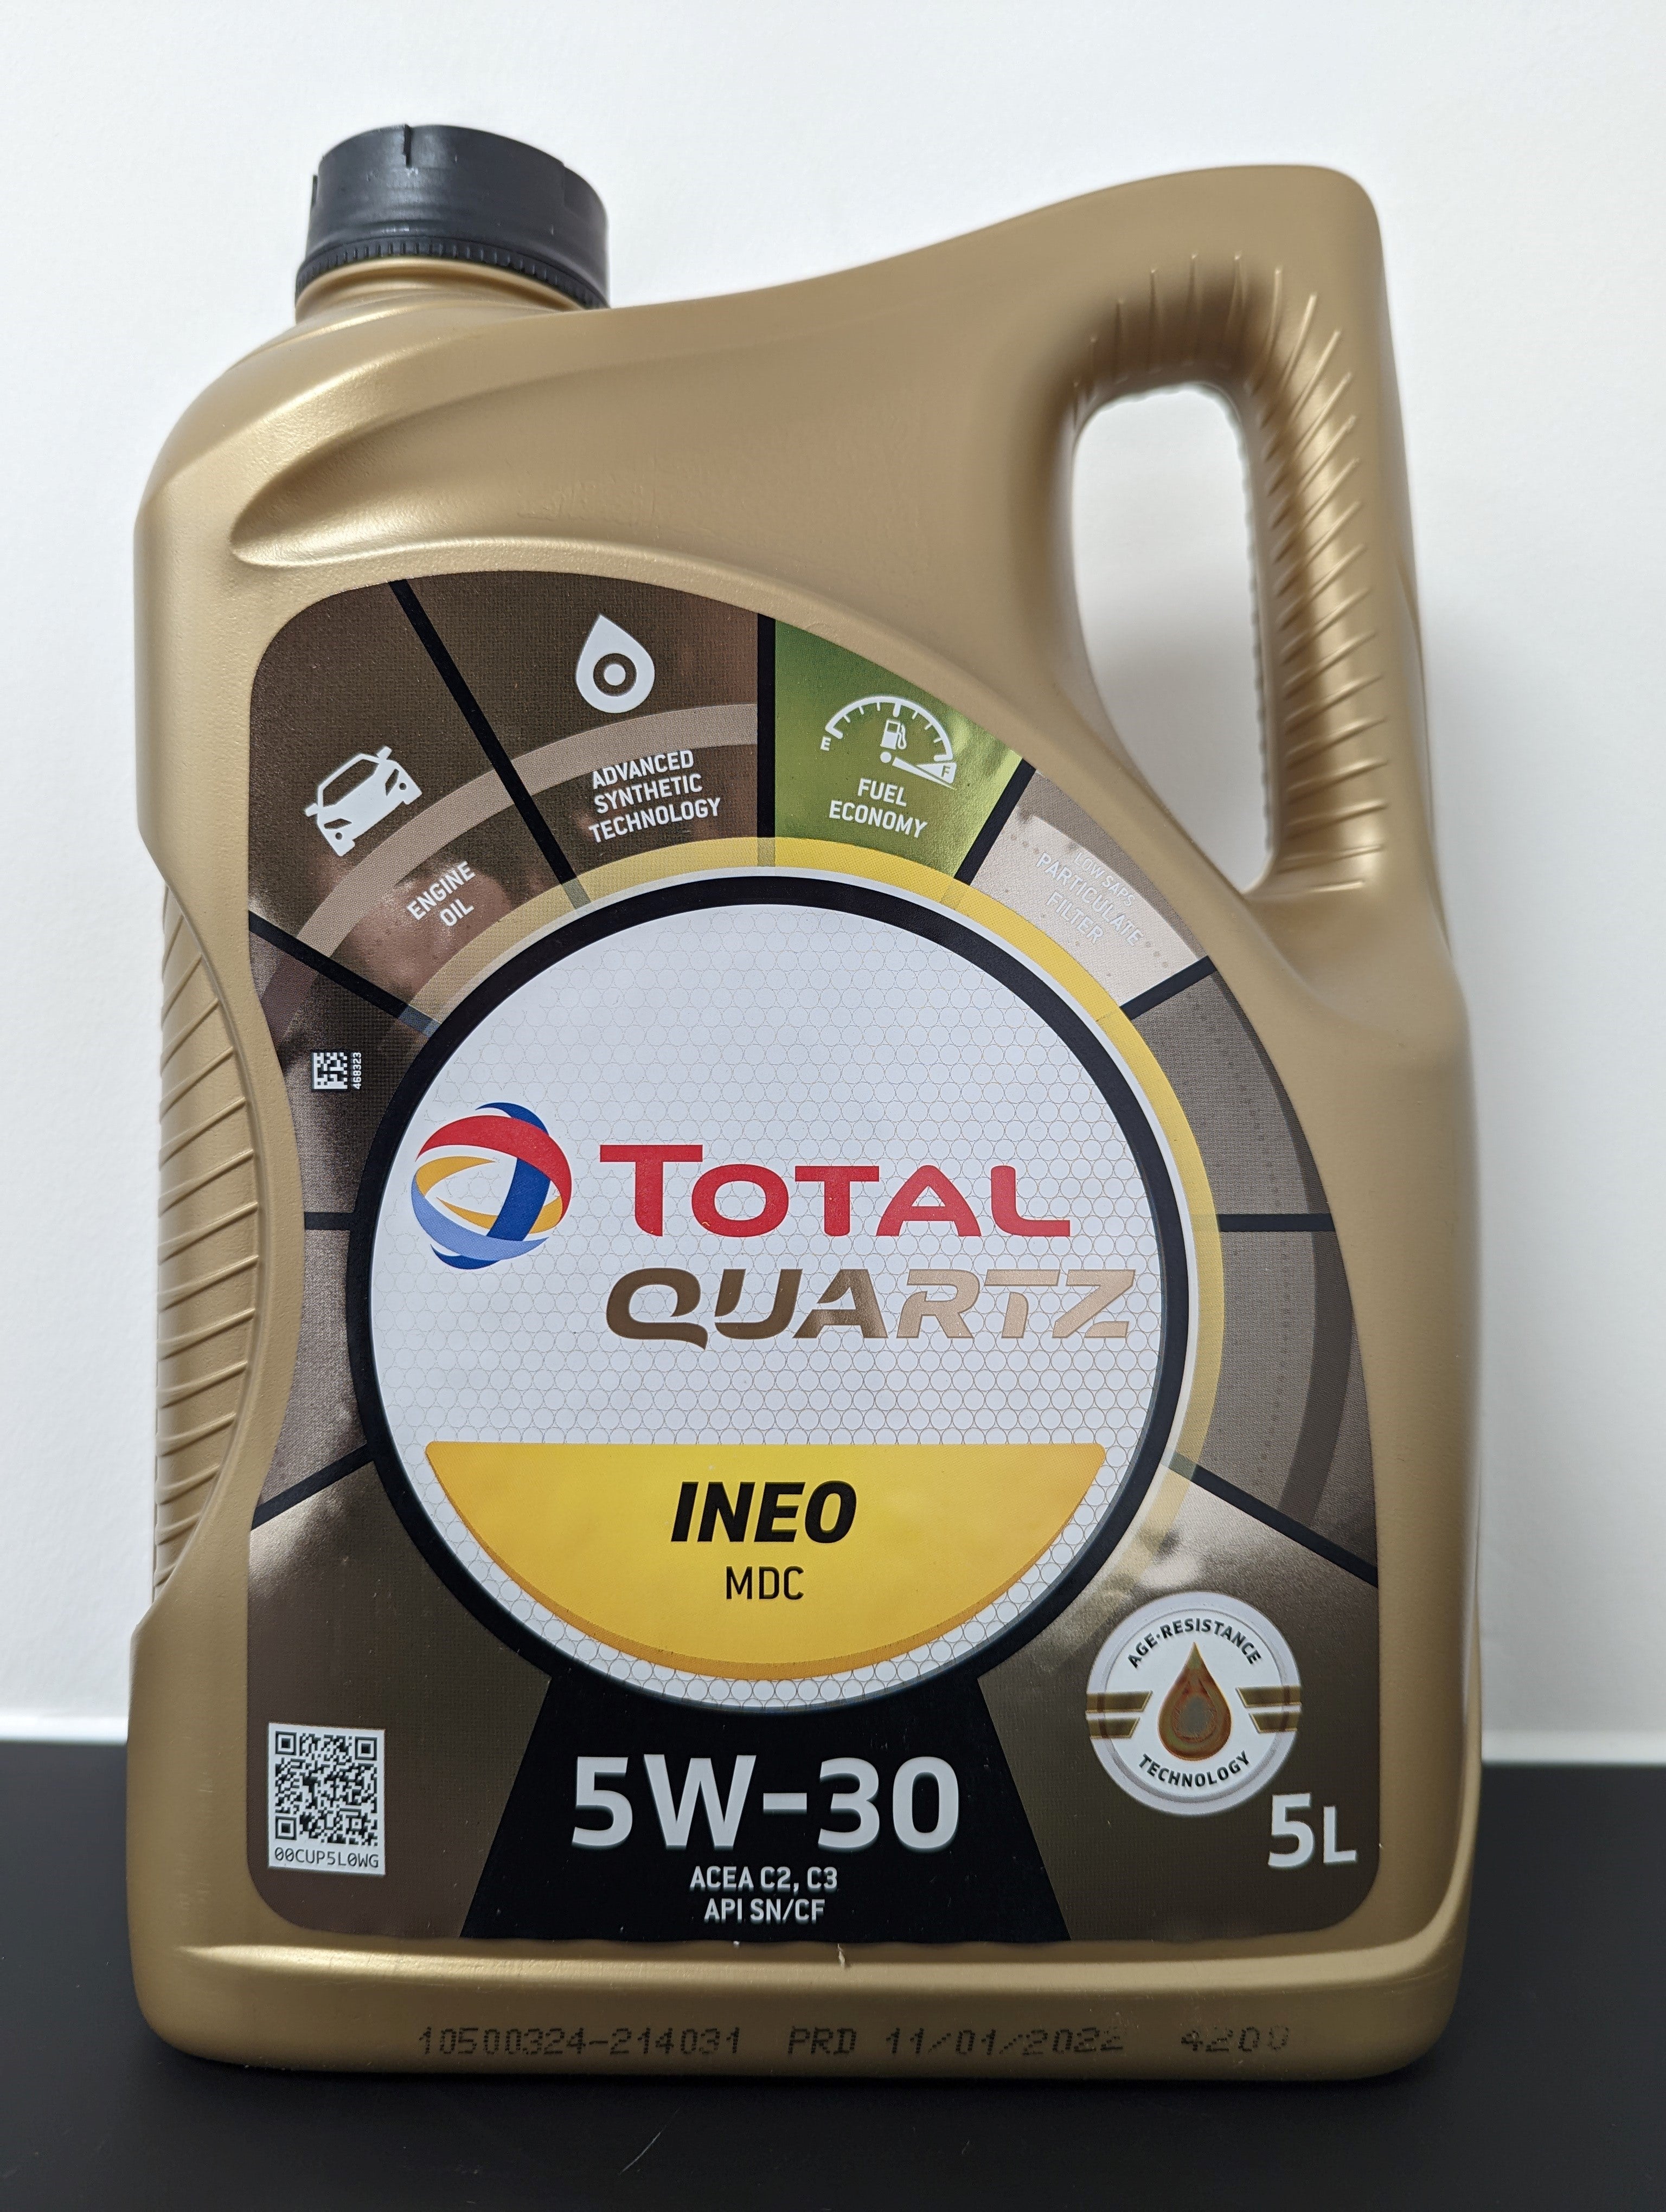 Original Opel 5W-30 dexos2 | 6 Litres | Buy online motor oil